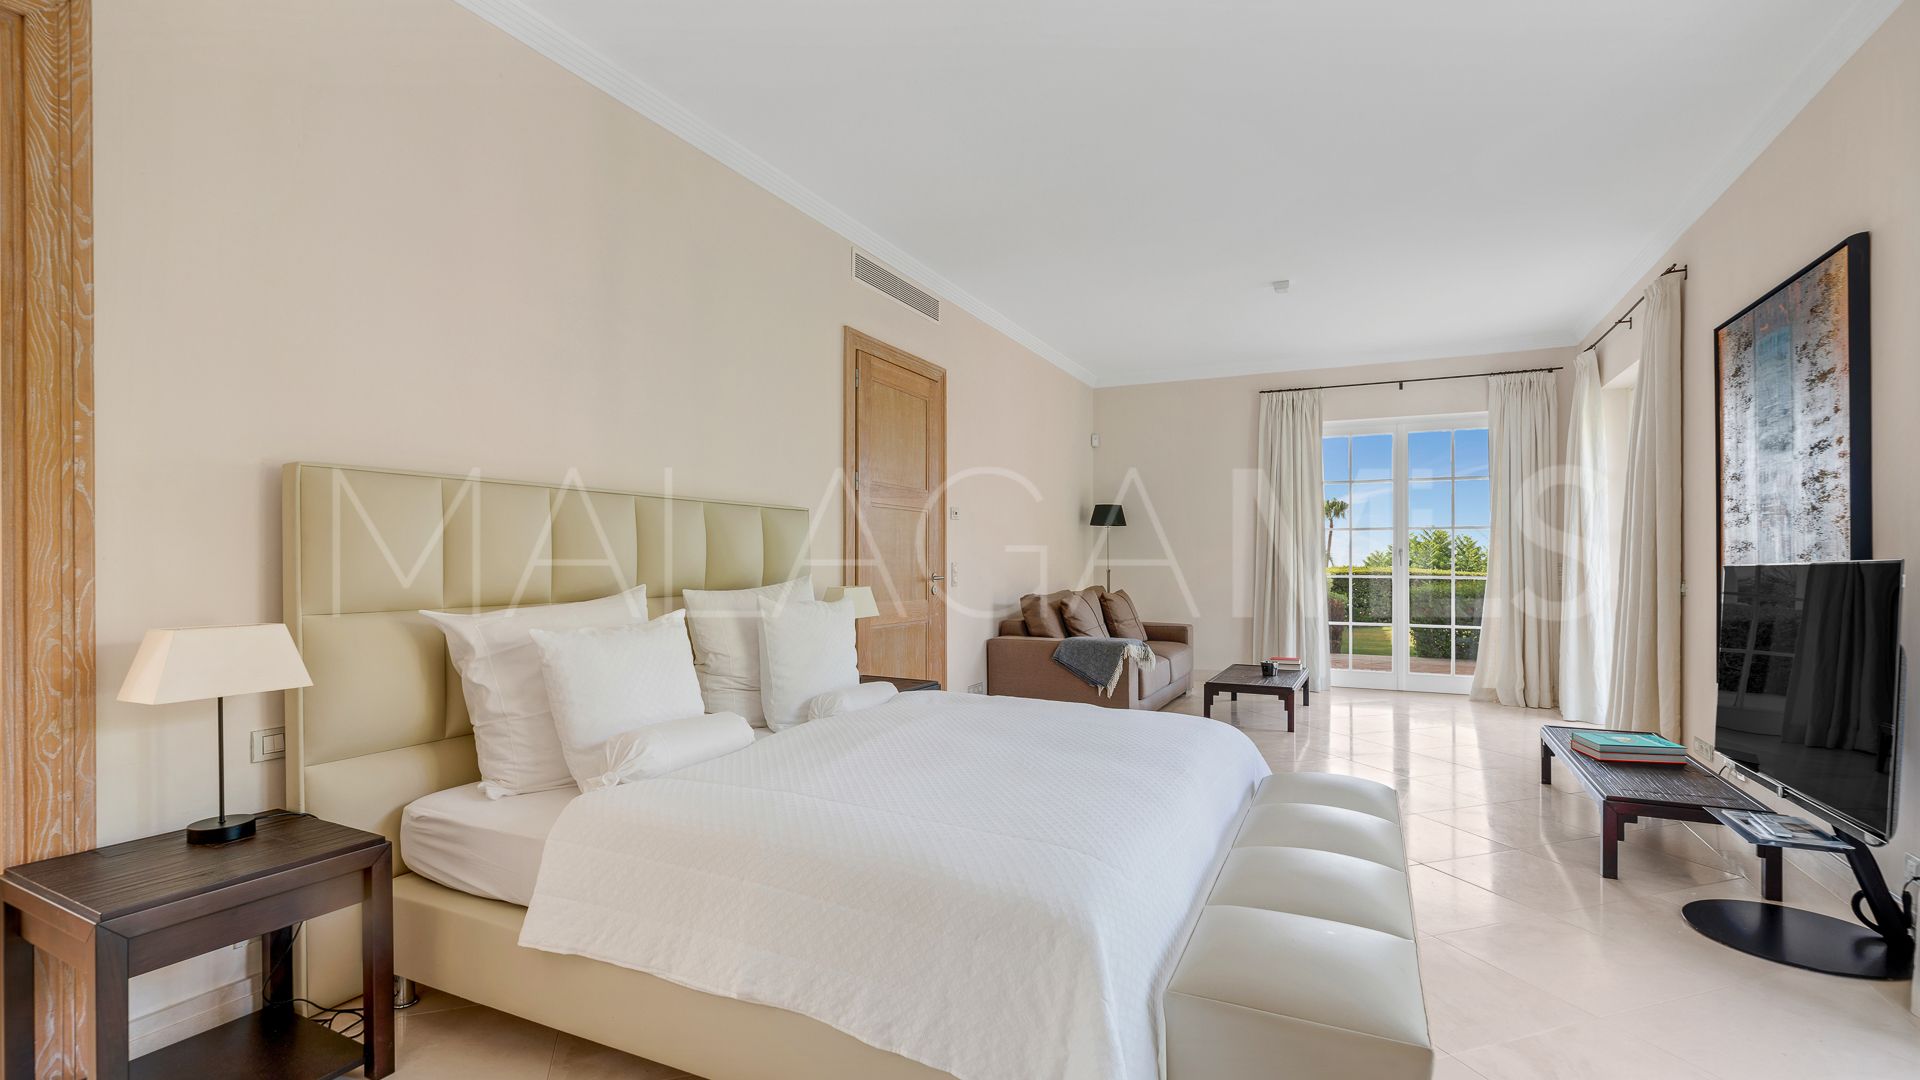 5 bedrooms villa in Sierra Blanca for sale